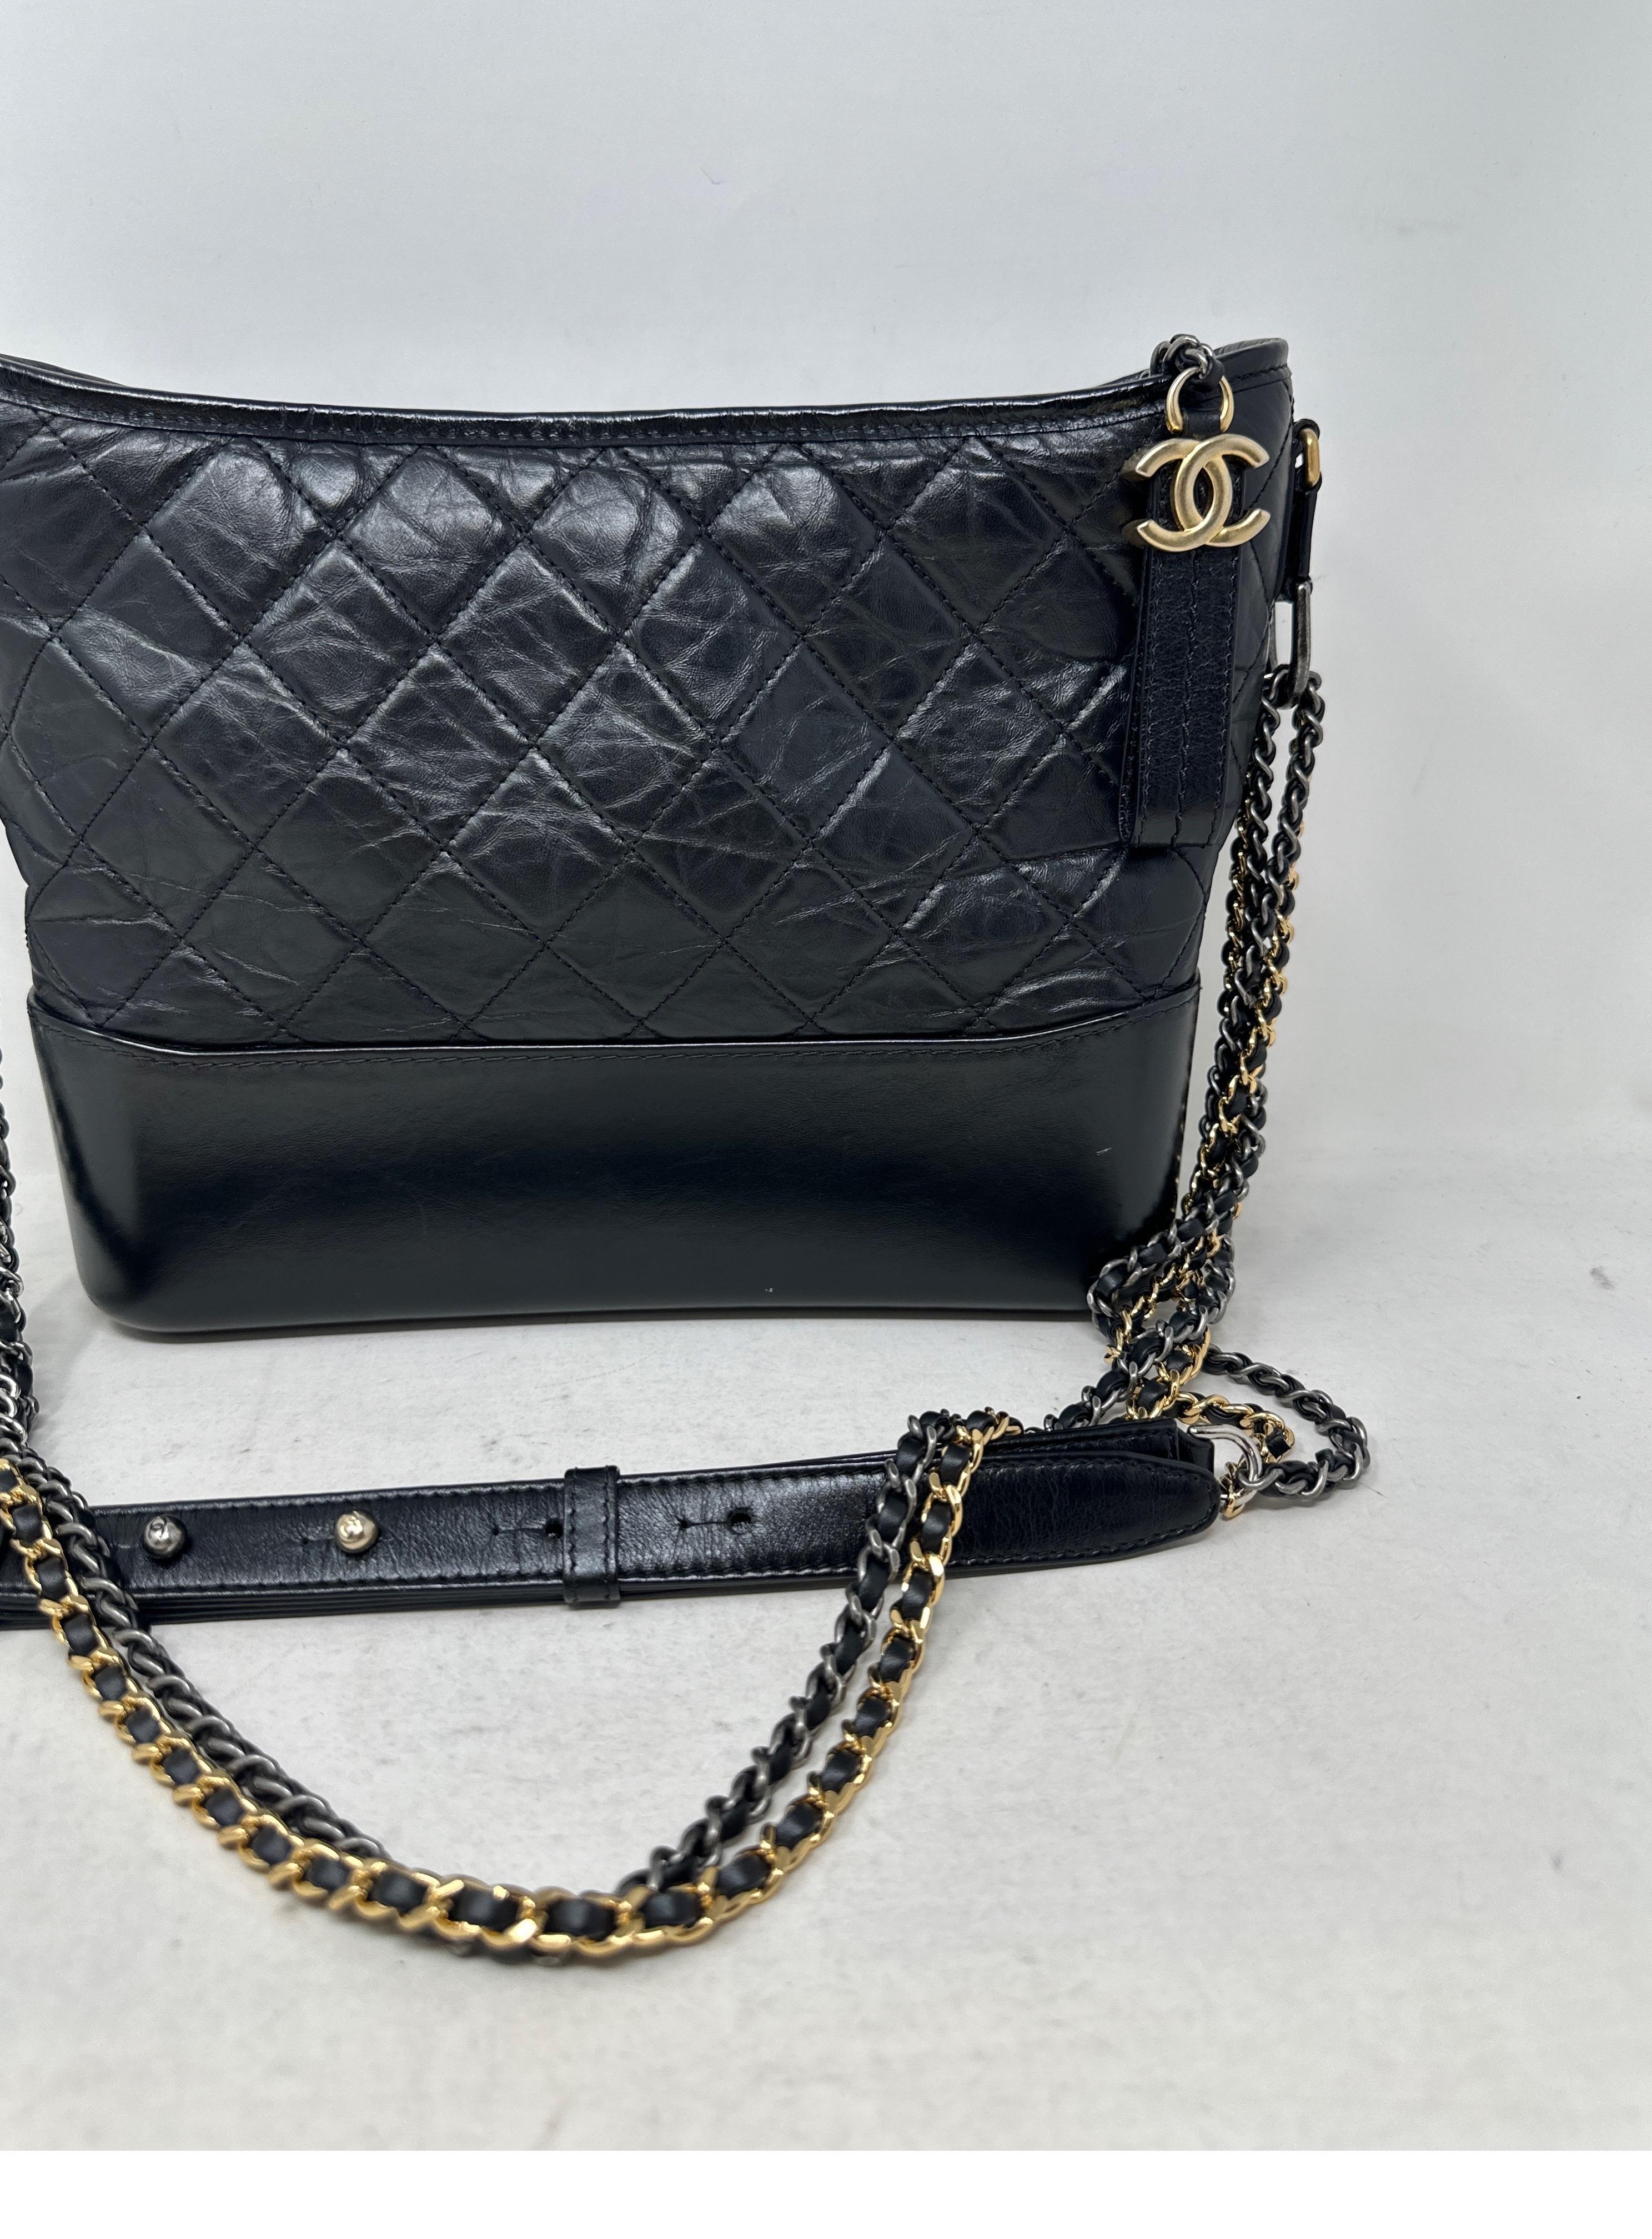 Chanel Black Gabrielle Medium Bag  13